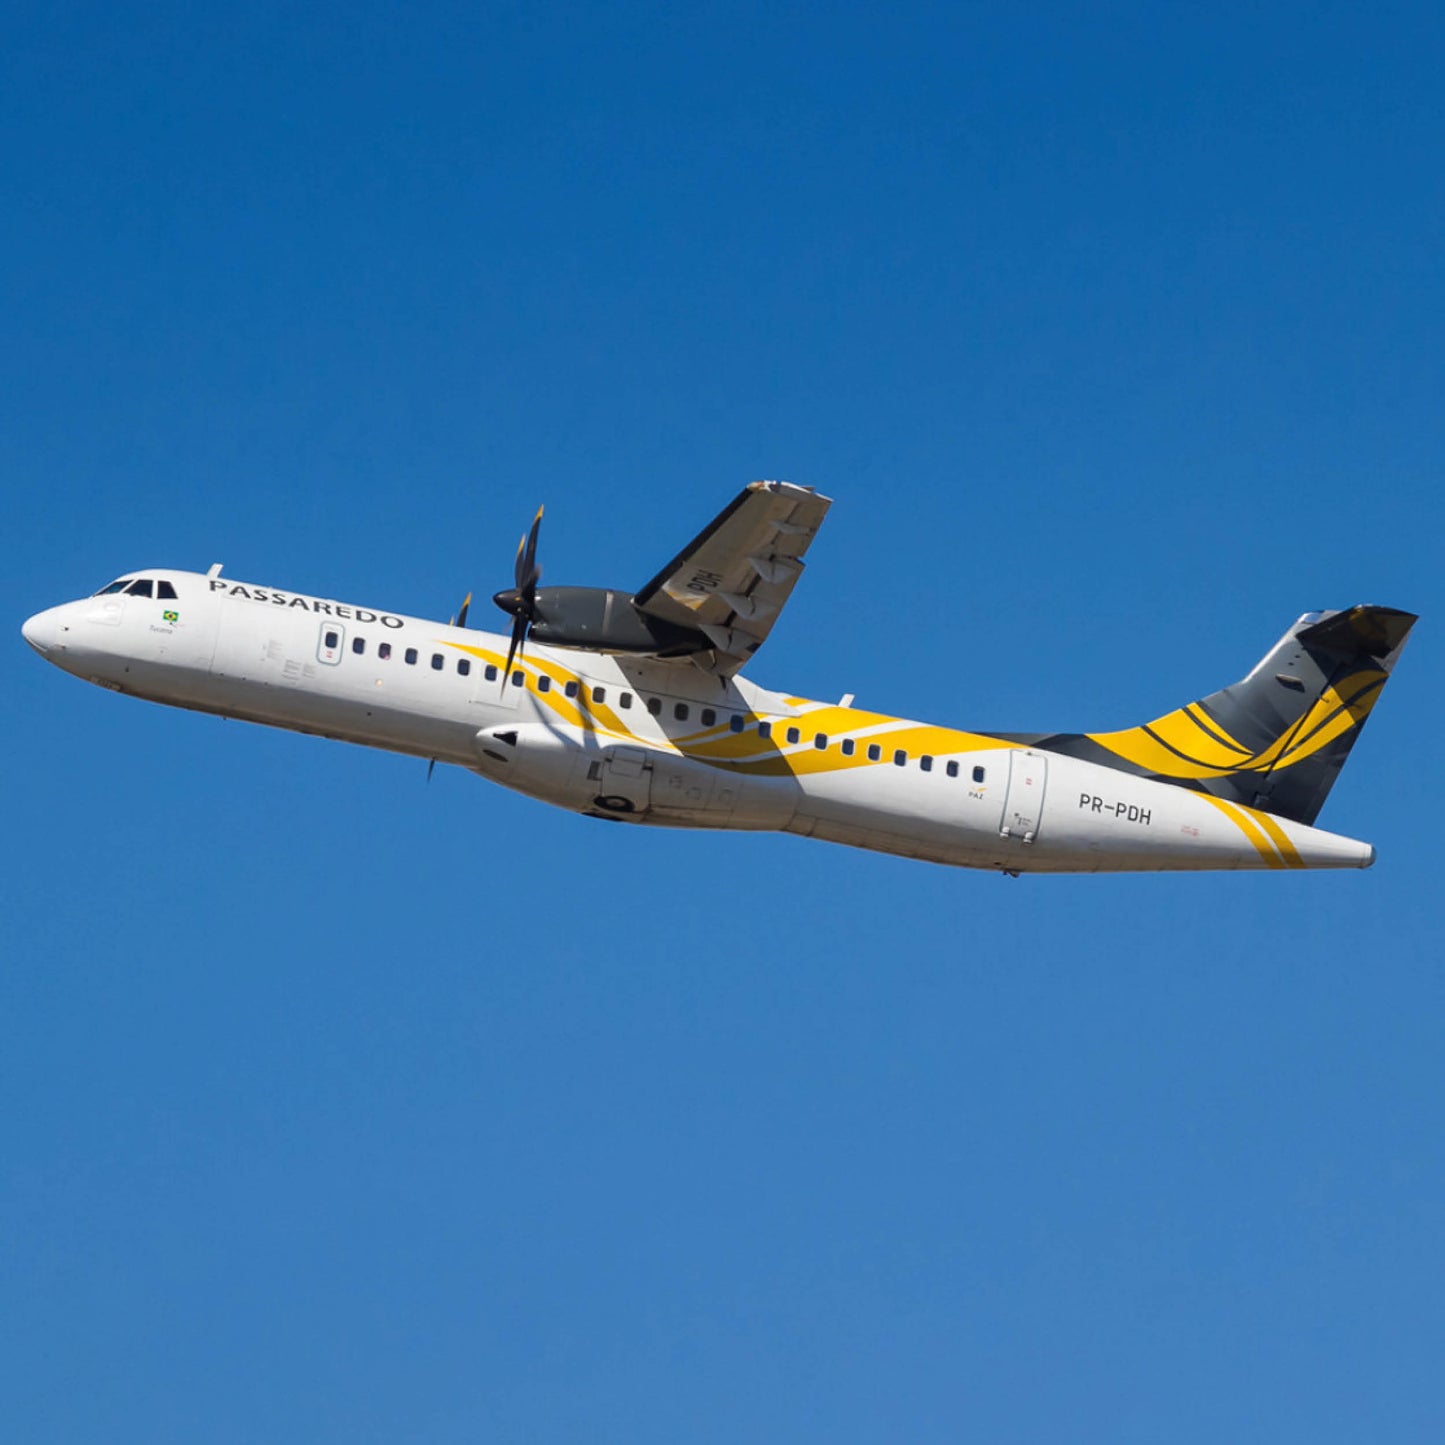 ATR 72 – PR-PDH (Light Yellow)